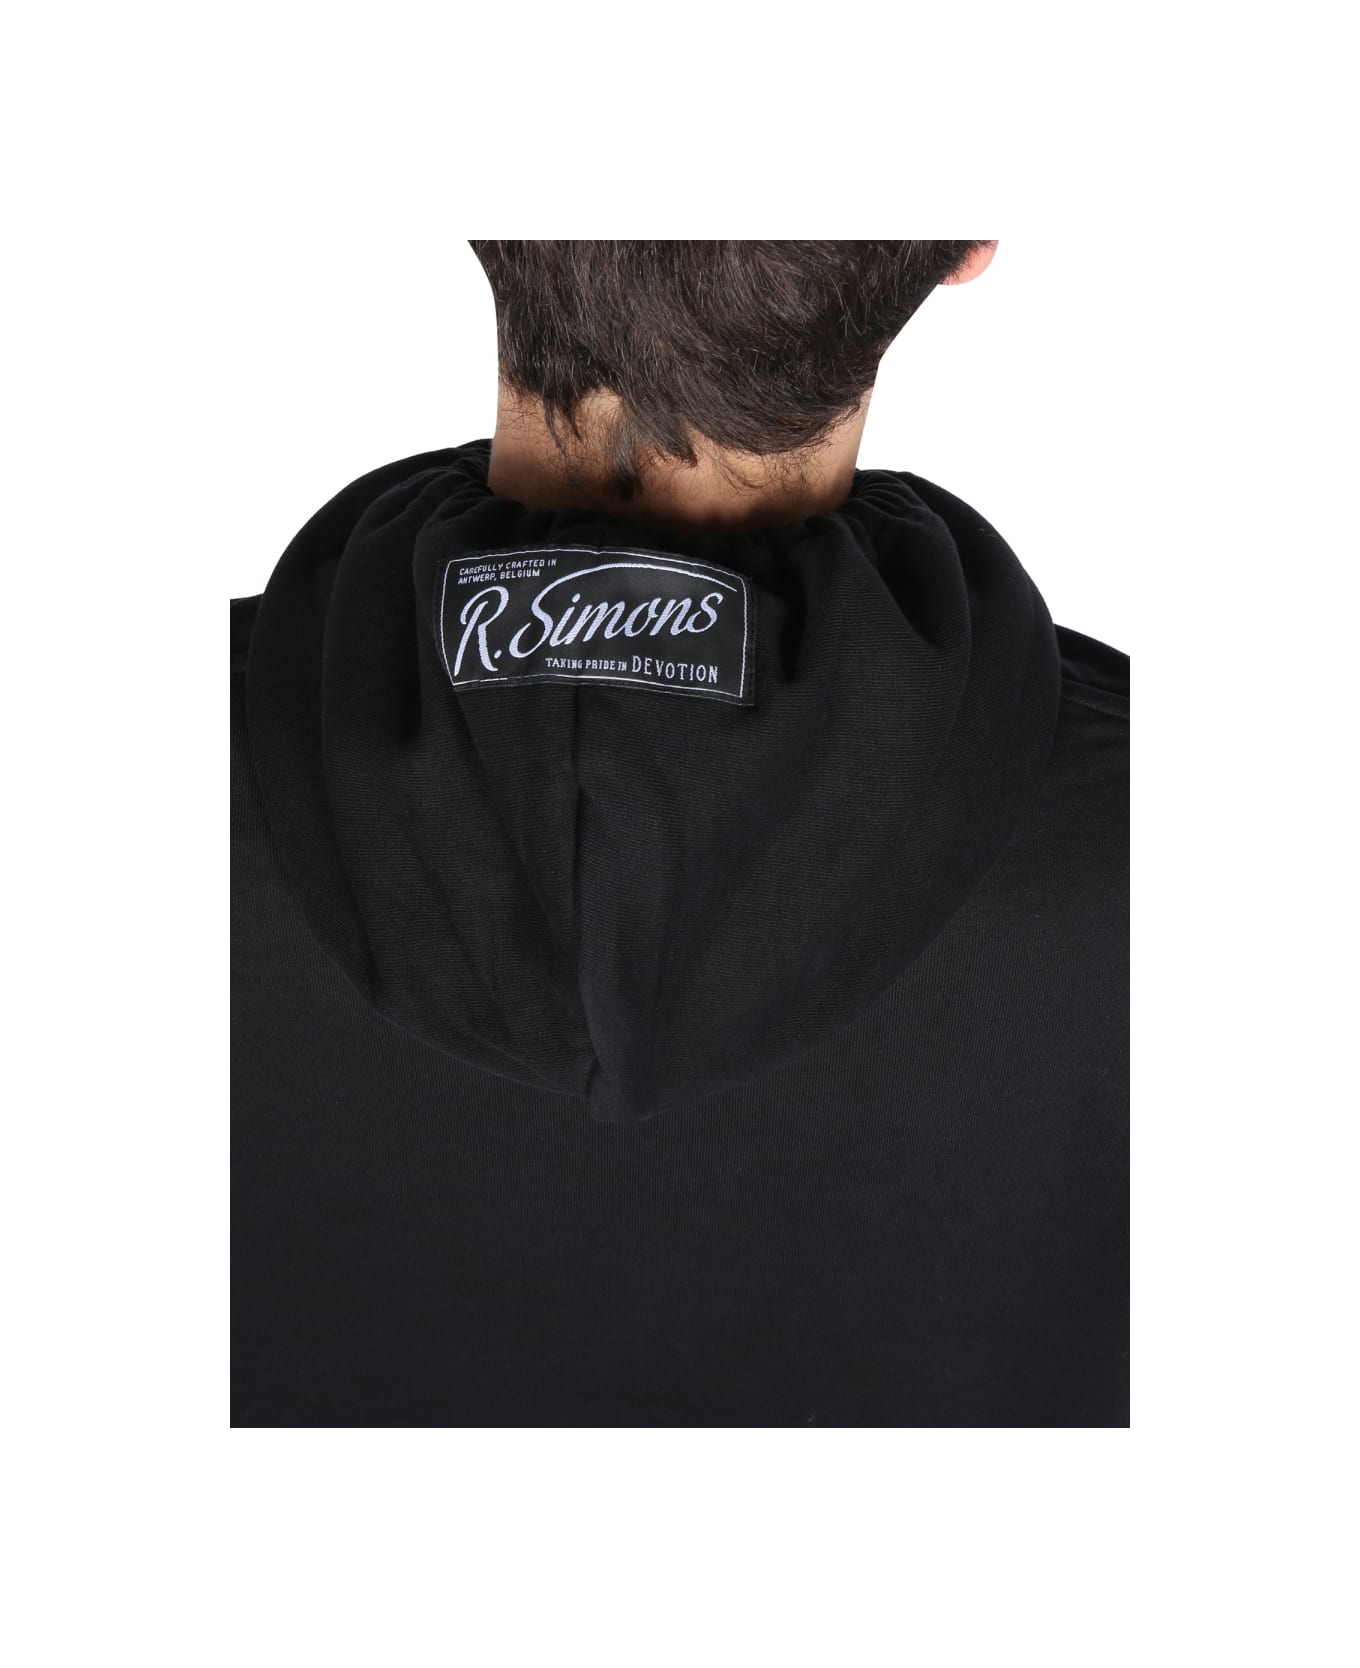 Raf Simons "sinchronicity" Sweatshirt - BLACK